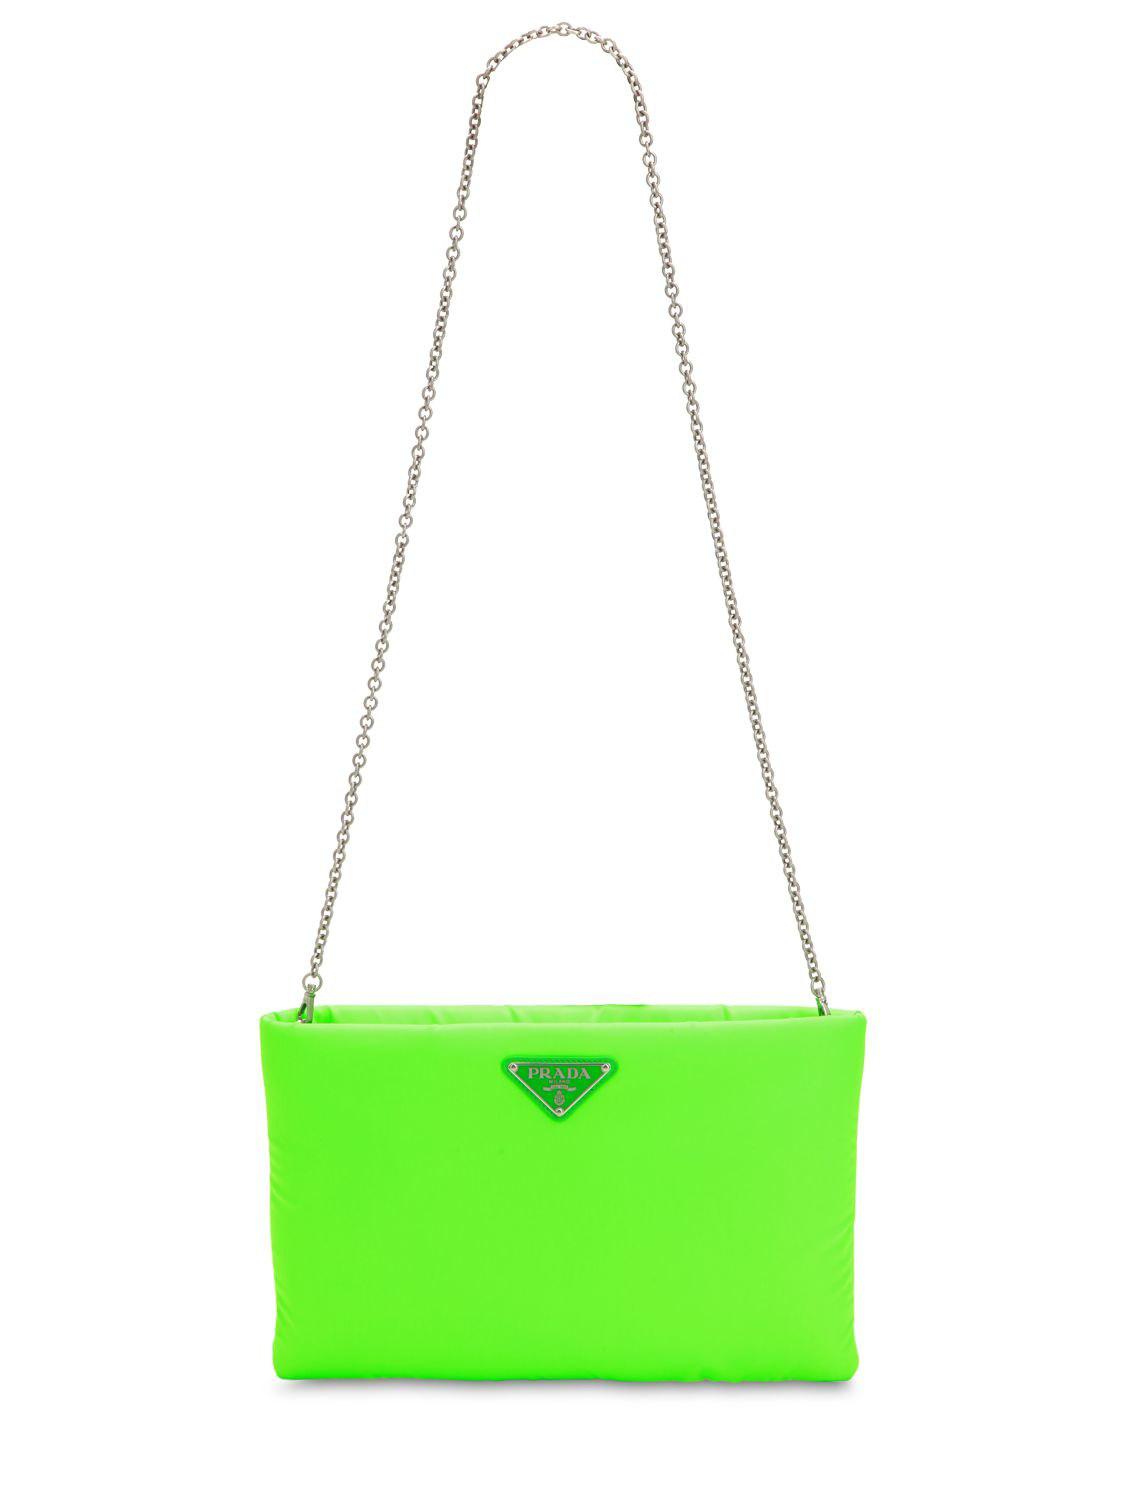 green prada purse